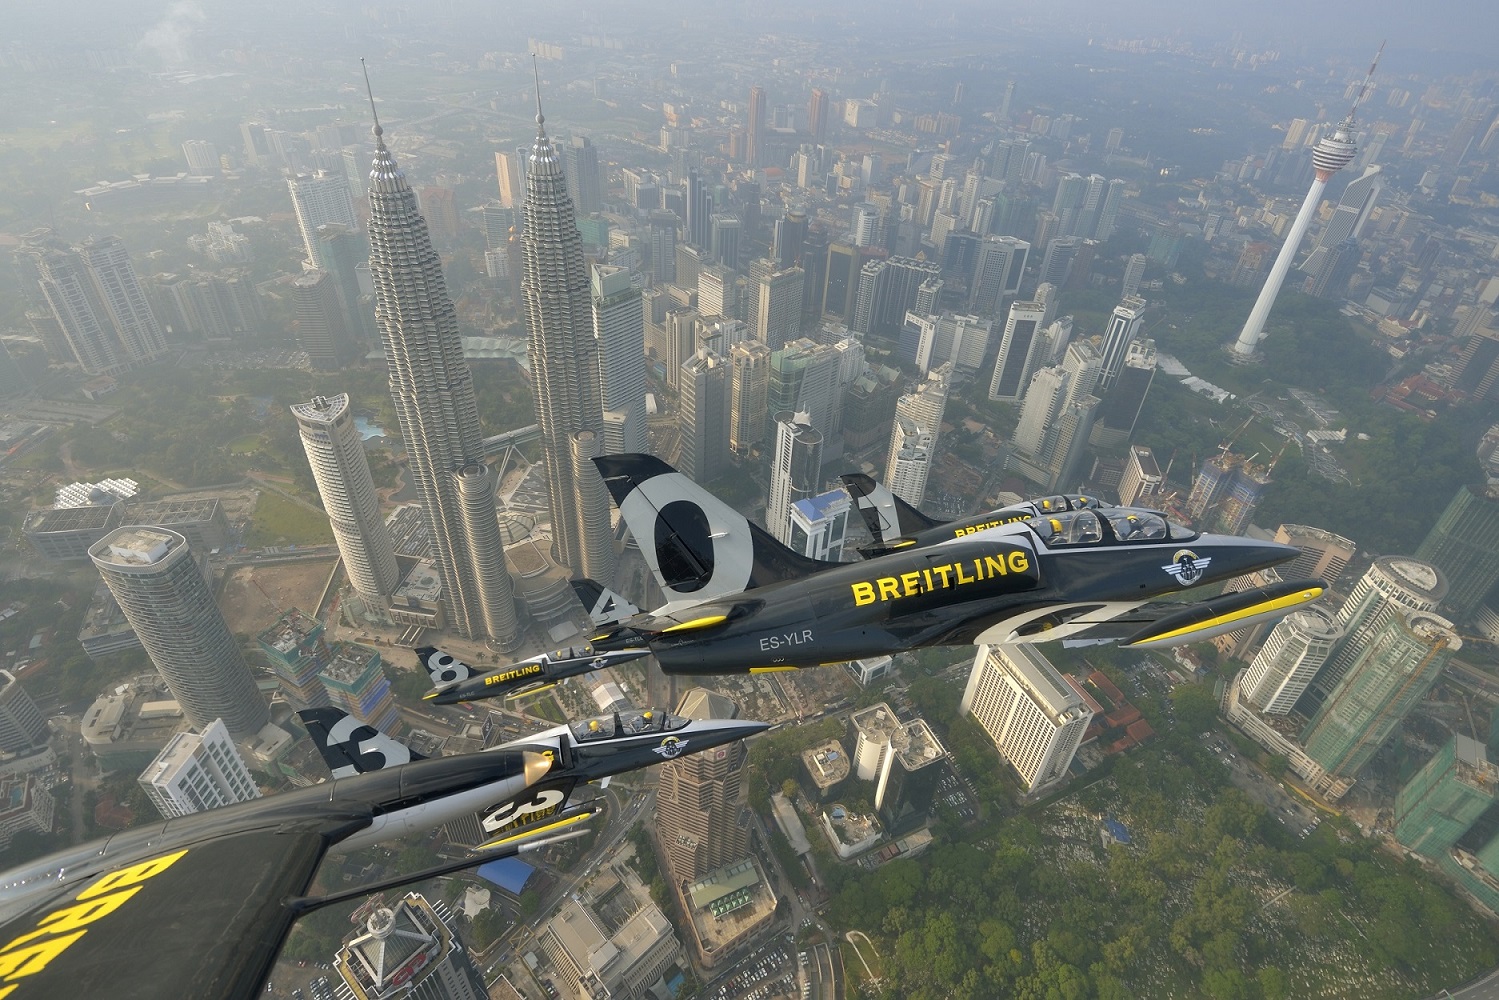 Breitling Jet Team in Malaysia ( Image Credit Tokunaga)